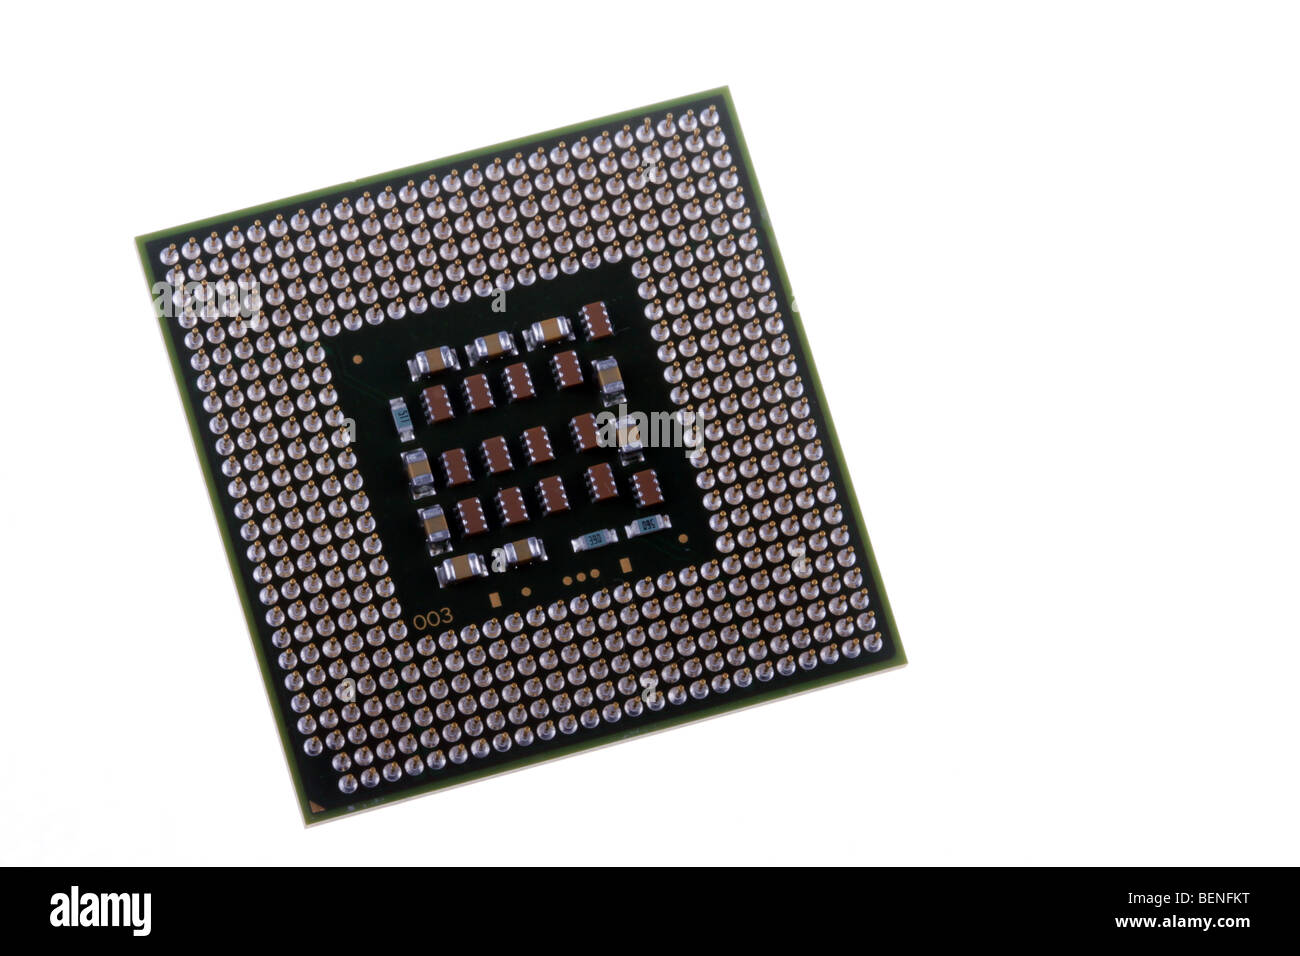 Intel Pentium 4 Socket 775 chip on a white background. Stock Photo